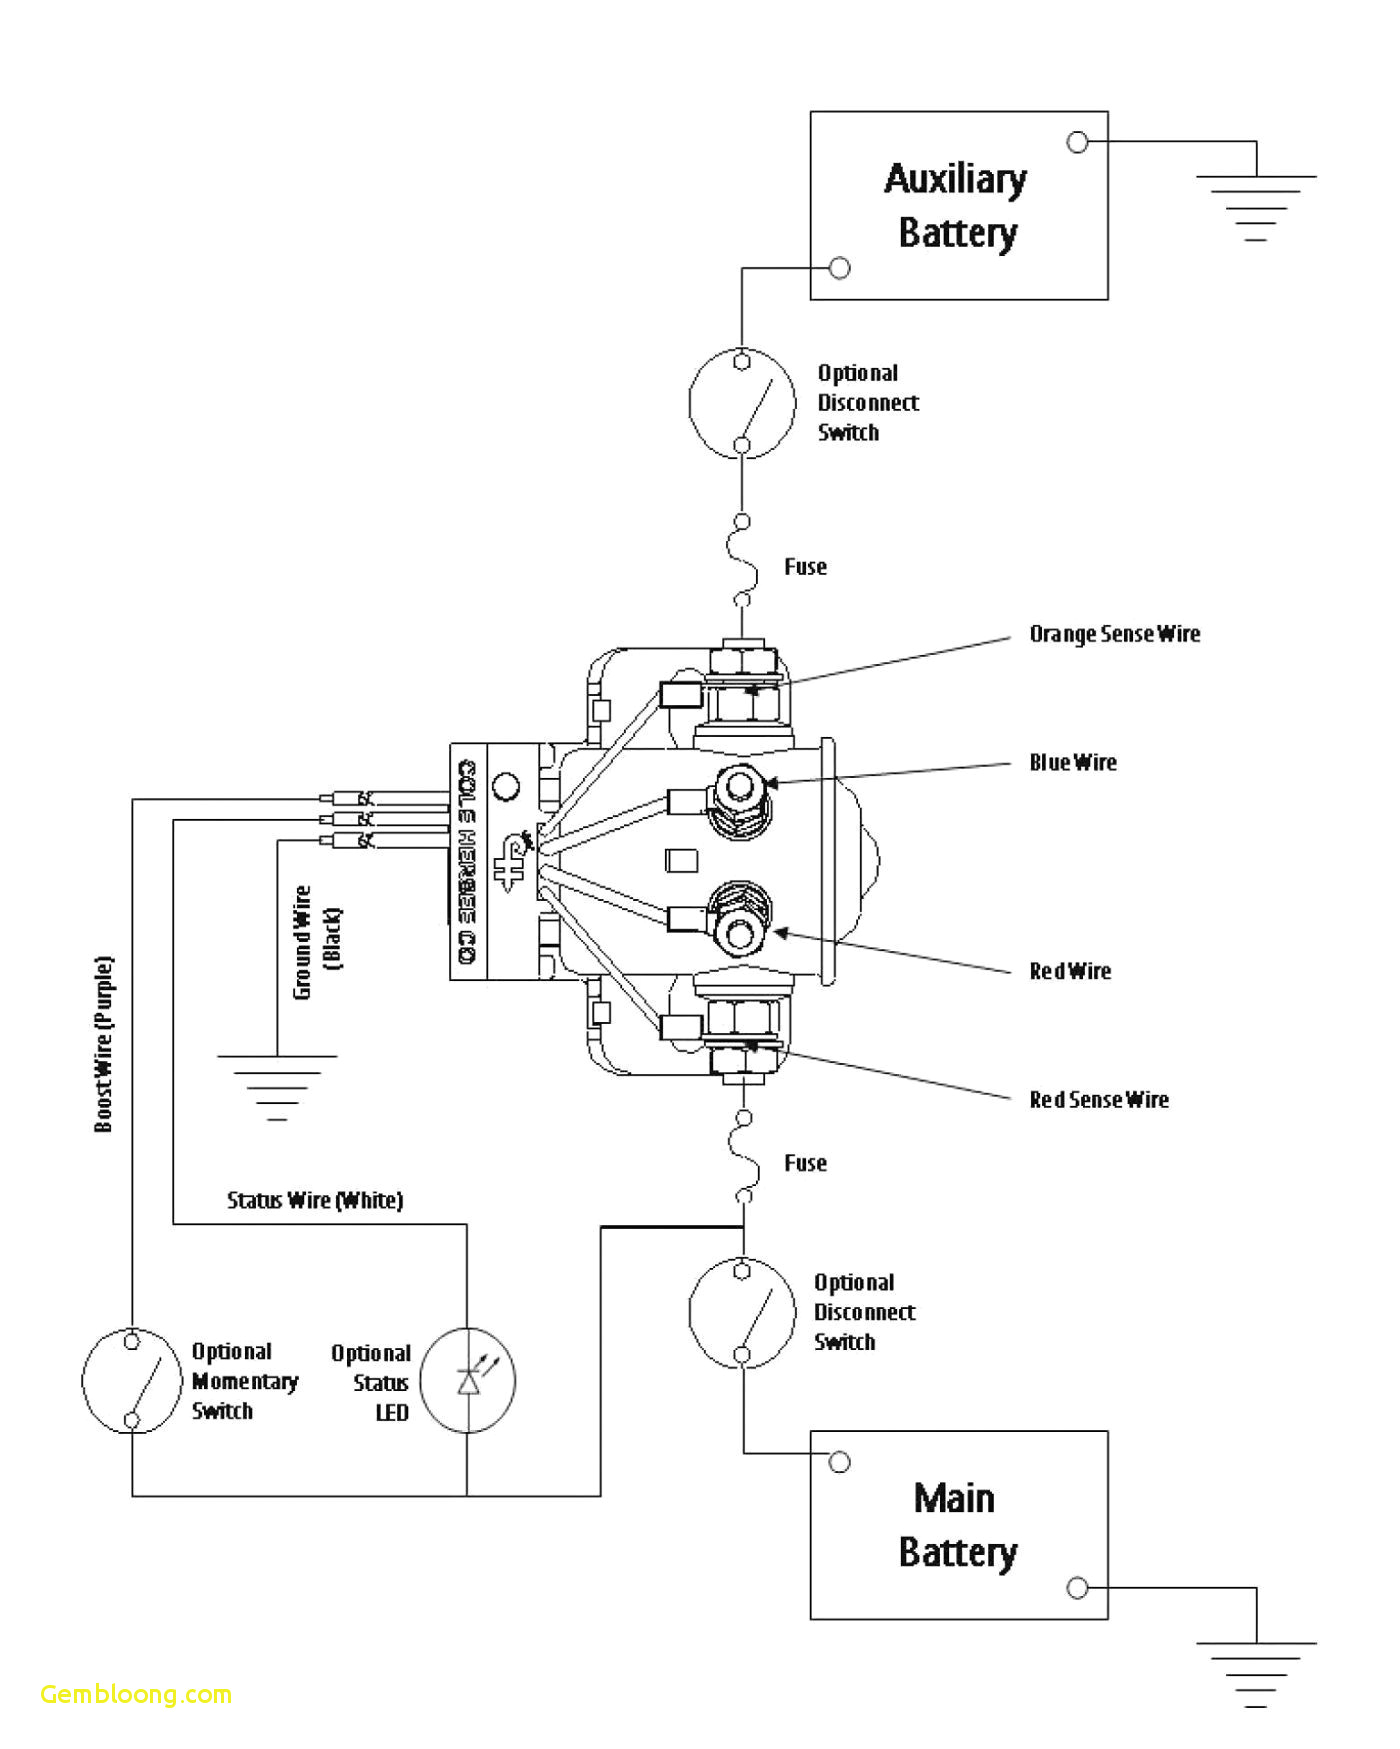 1971 ford alternator wiring wiring diagram ford alternator wiring internal